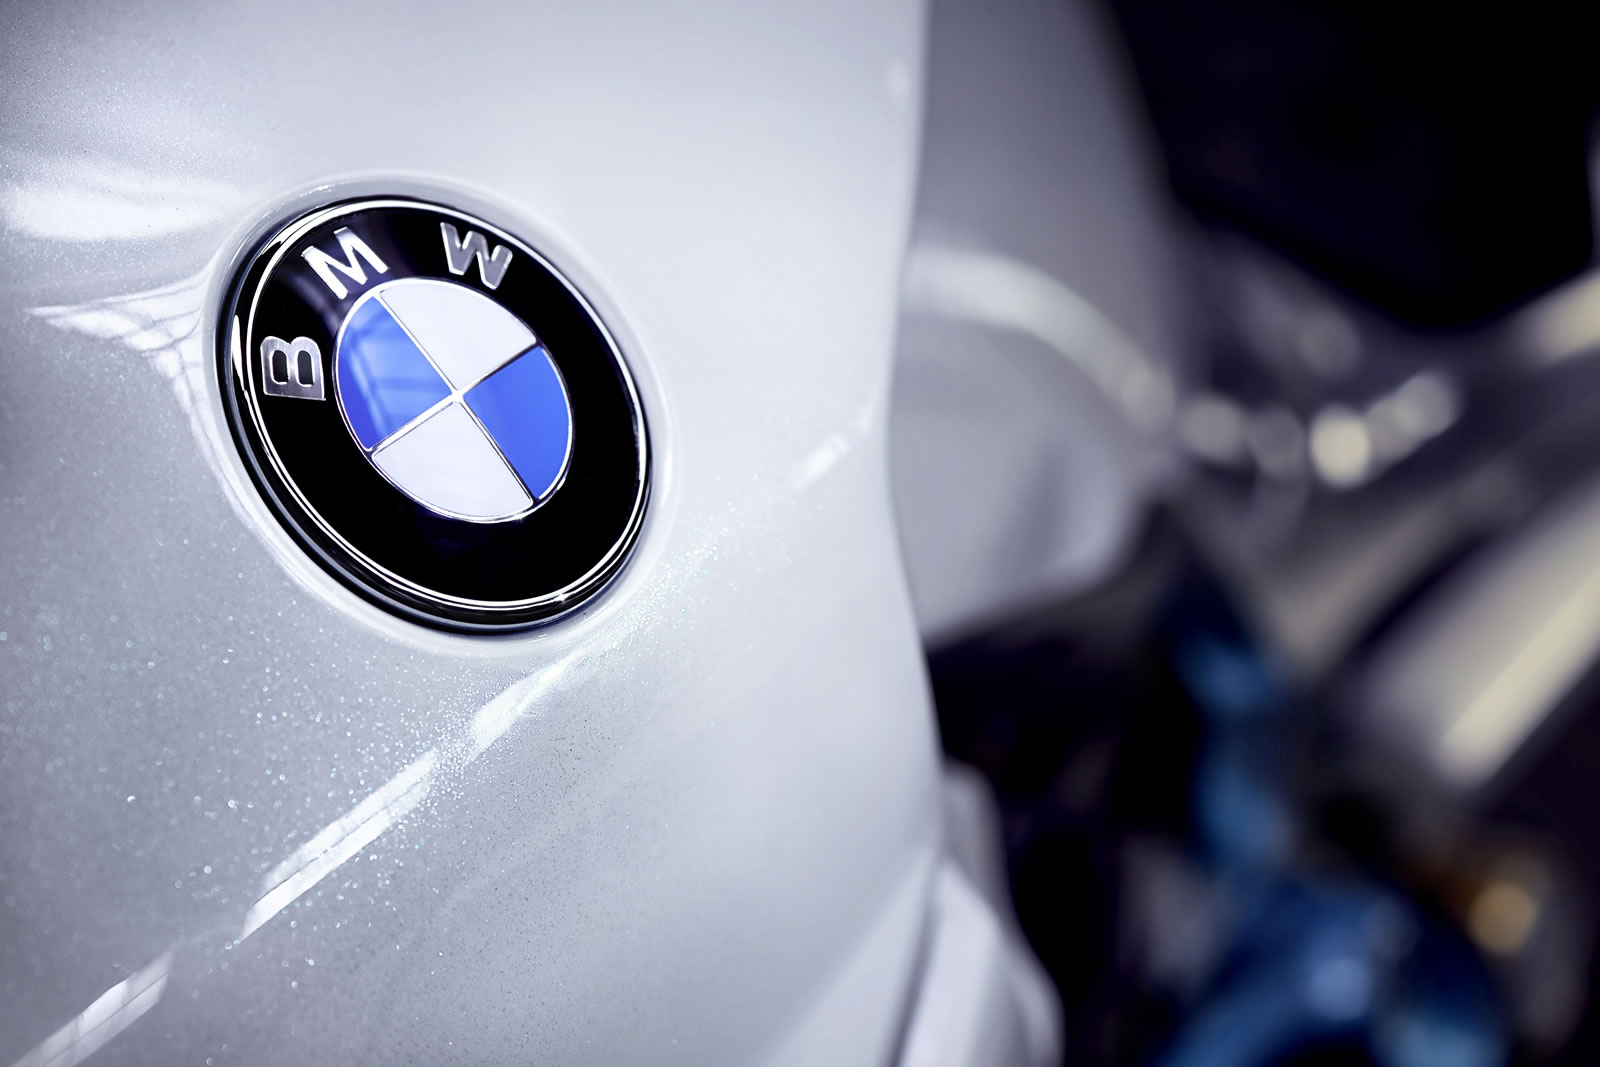 BMW Roadster Revolution